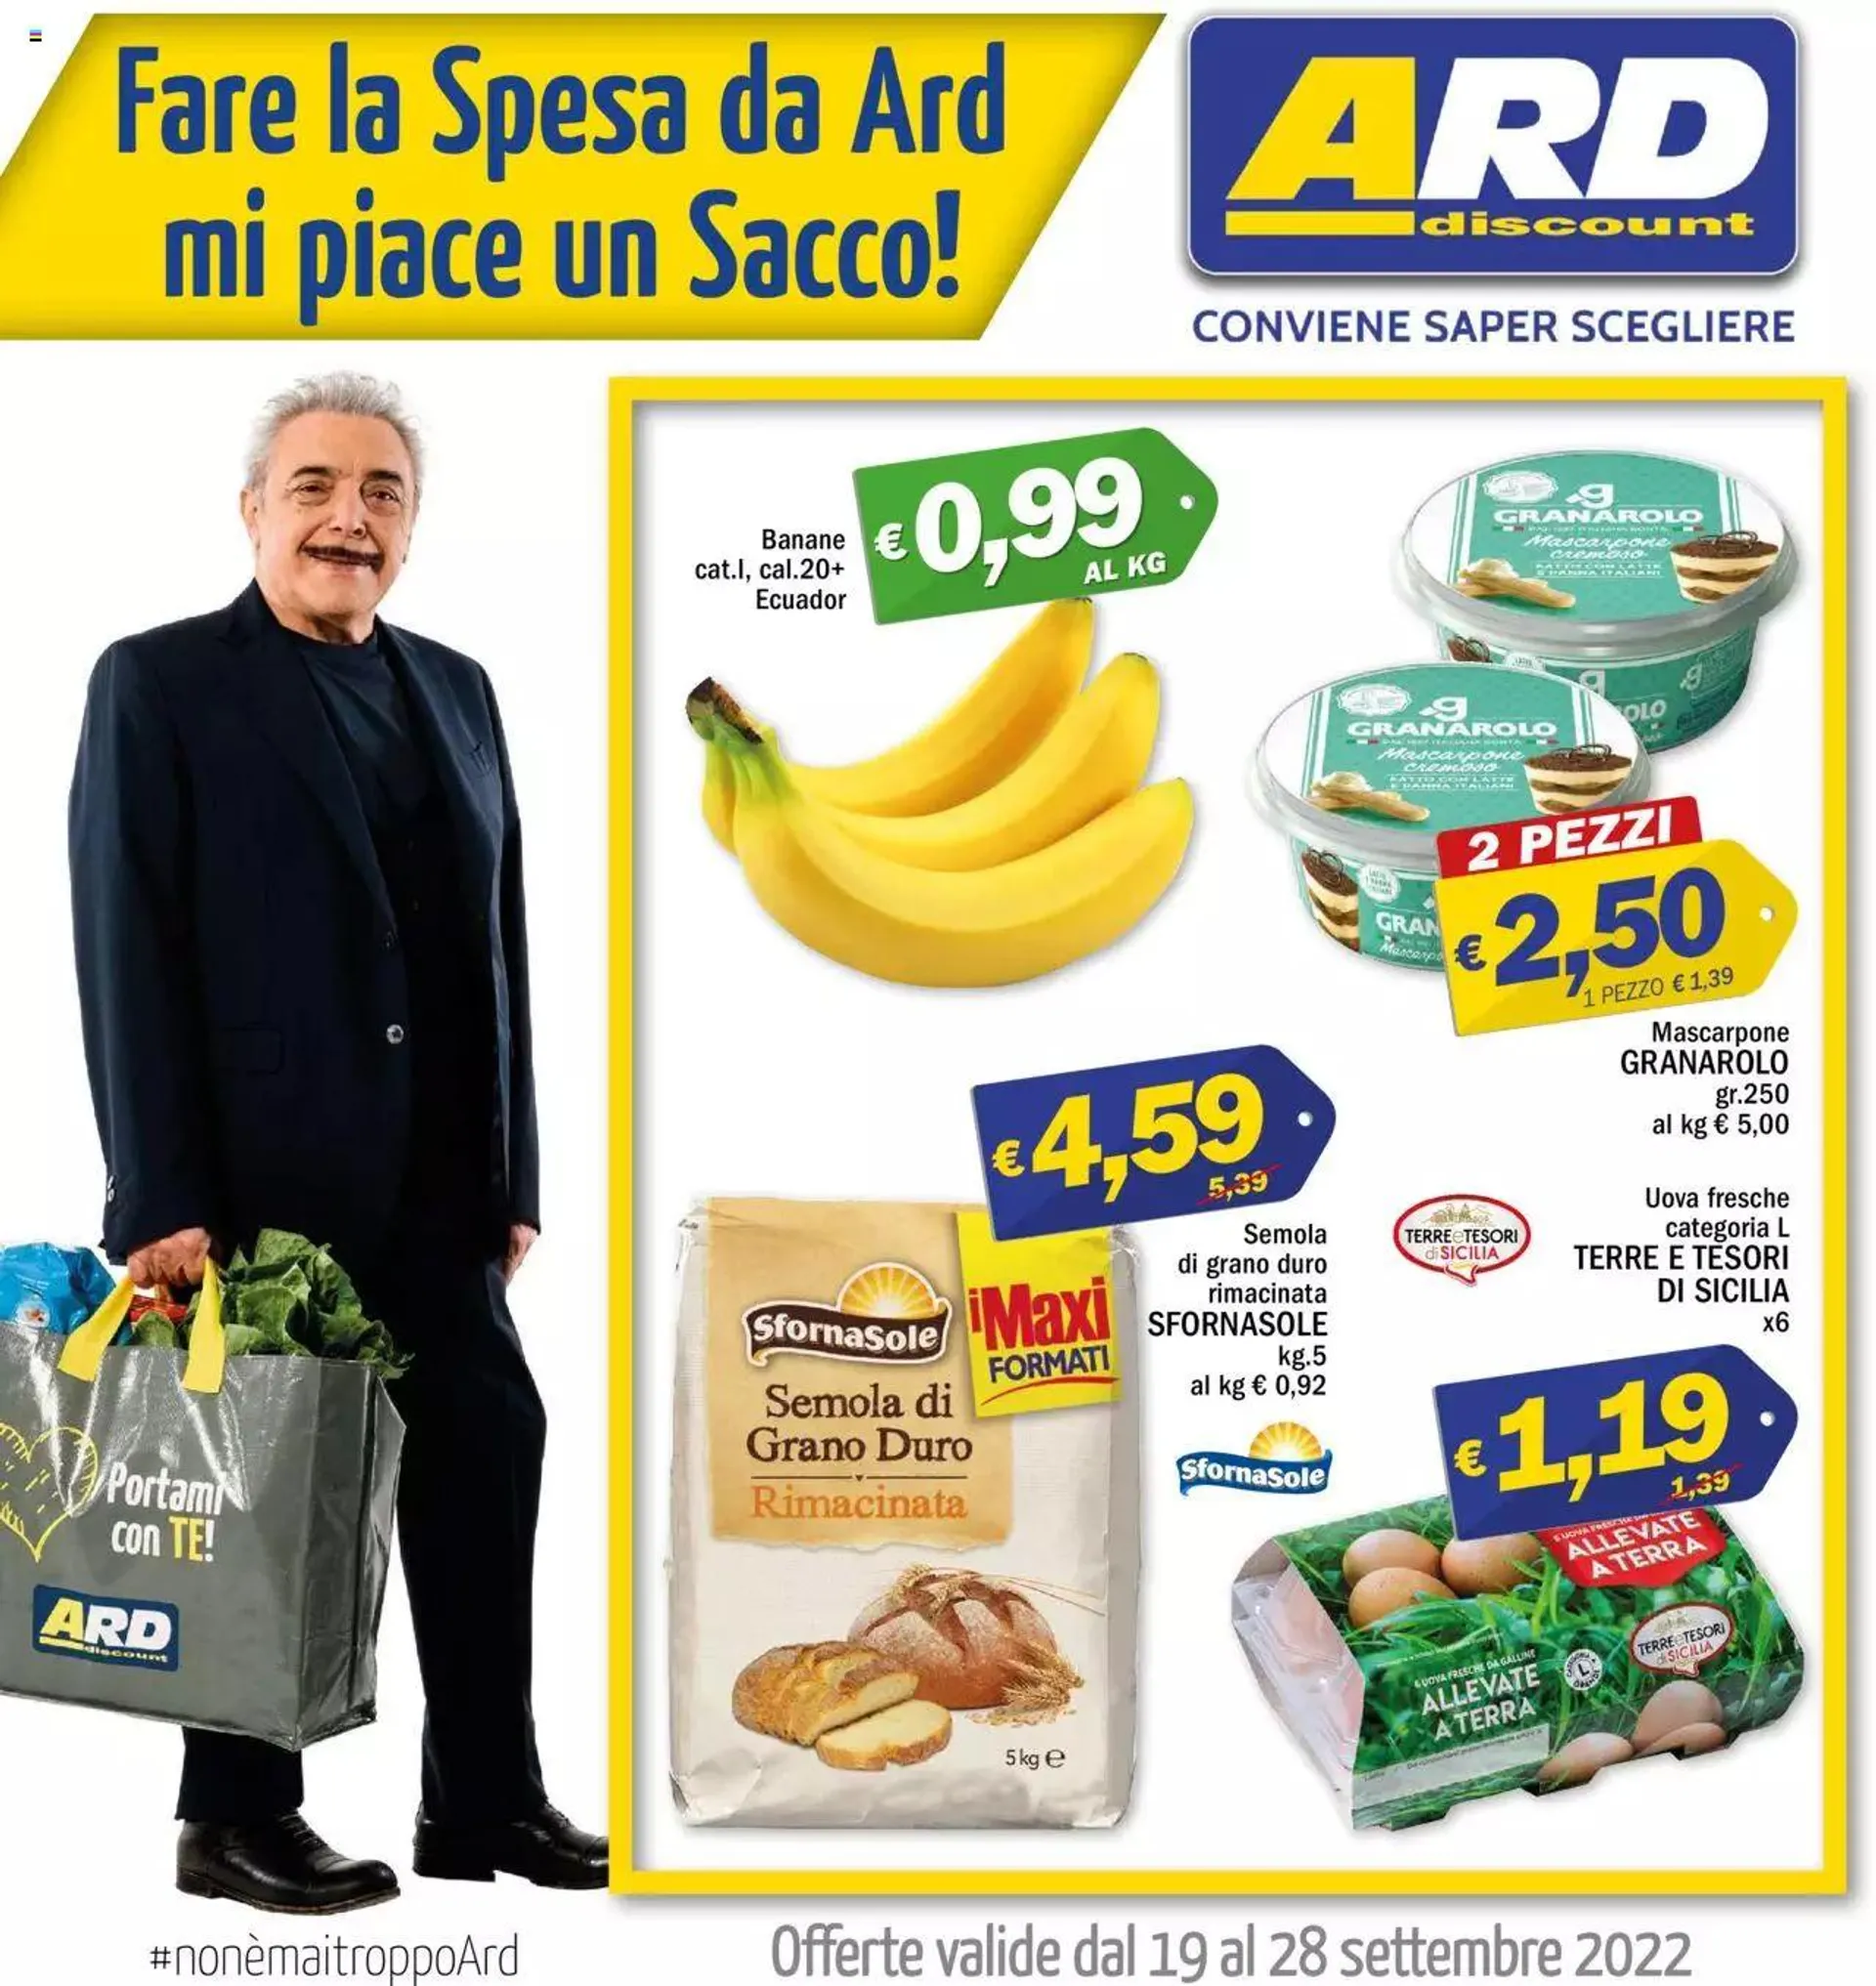 ARD Discount - Volantino - 0